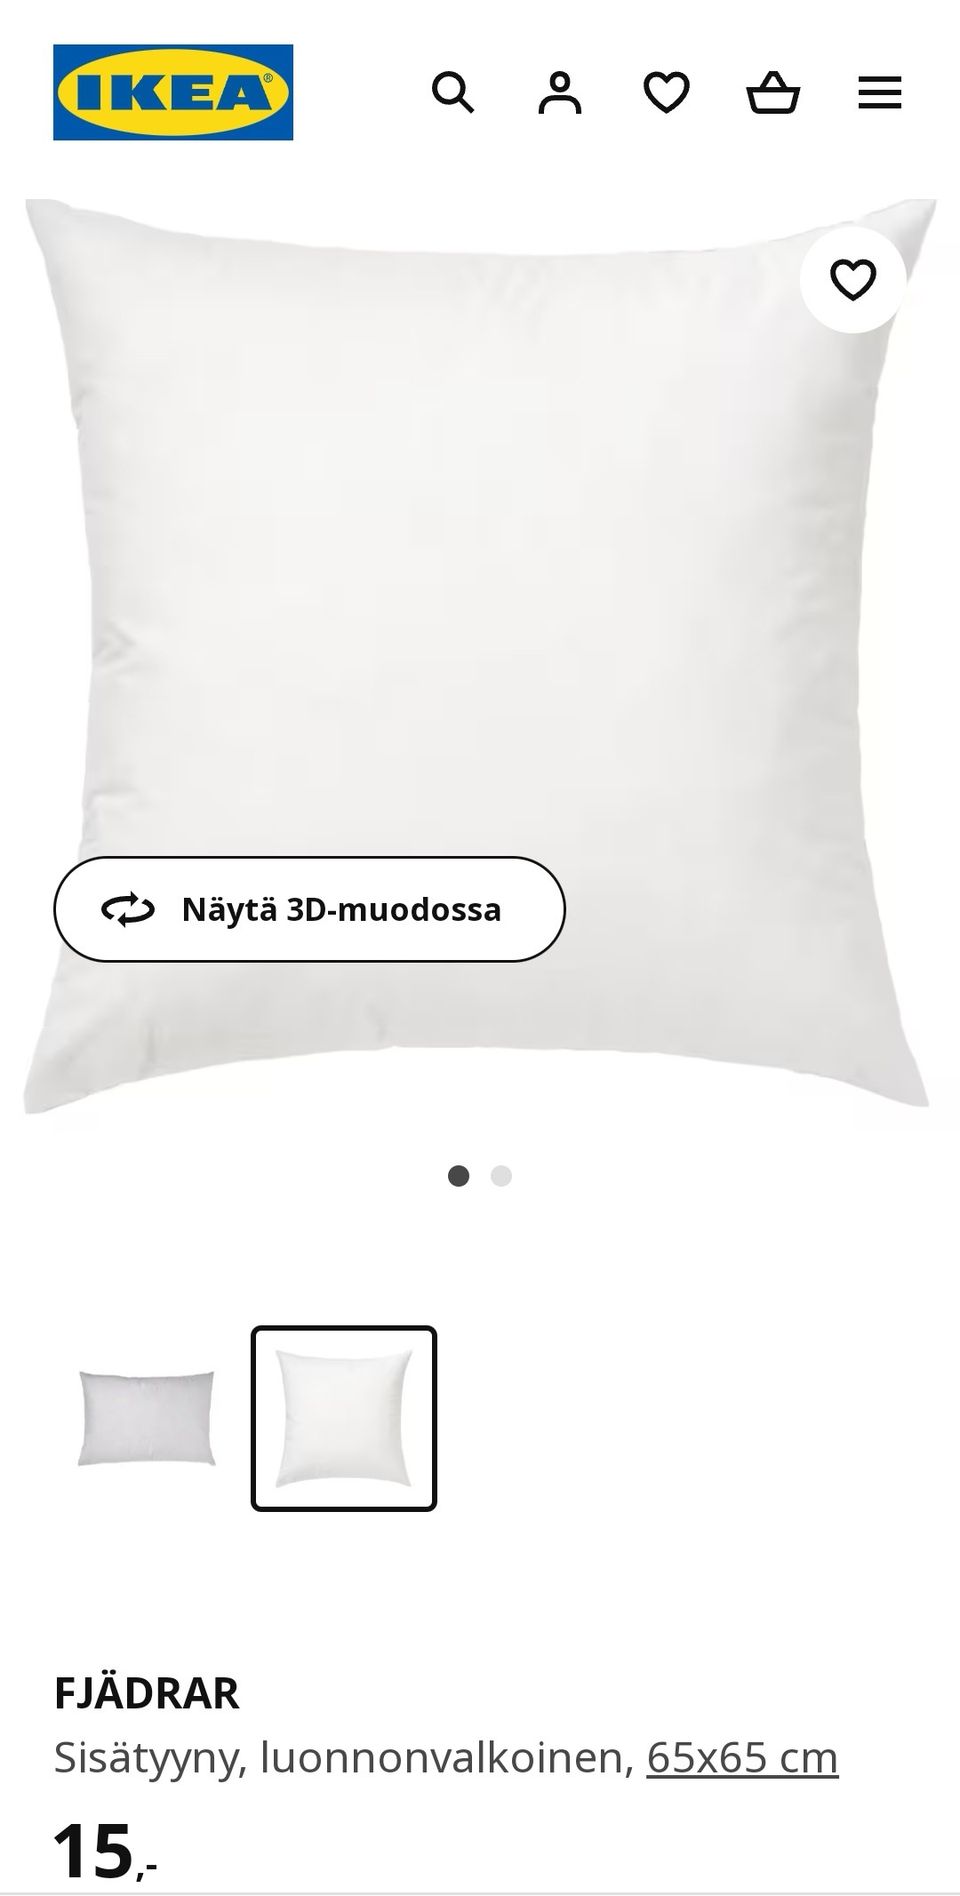 Ikea Fjädrar tyyny